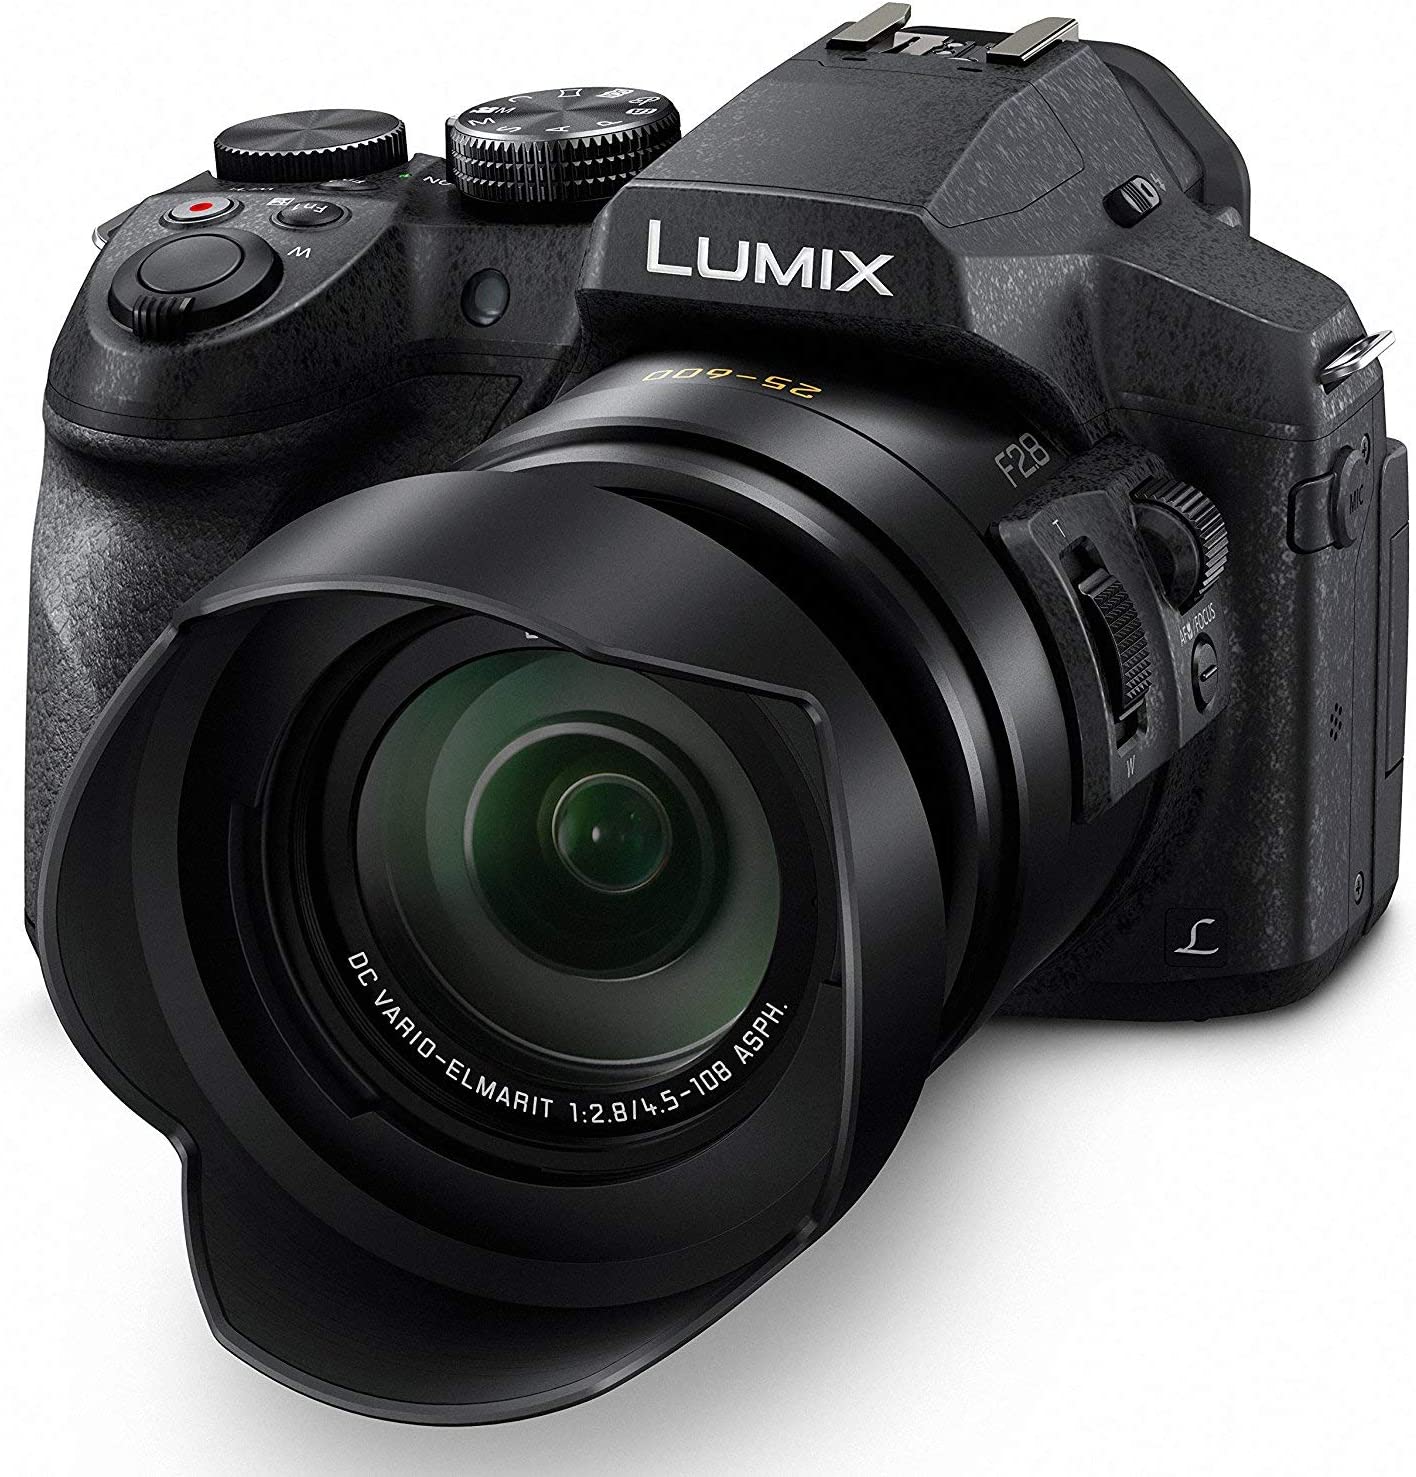 Panasonic LUMIX FZ300 Long Zoom Digital Camera 25% Off Now At $447.99